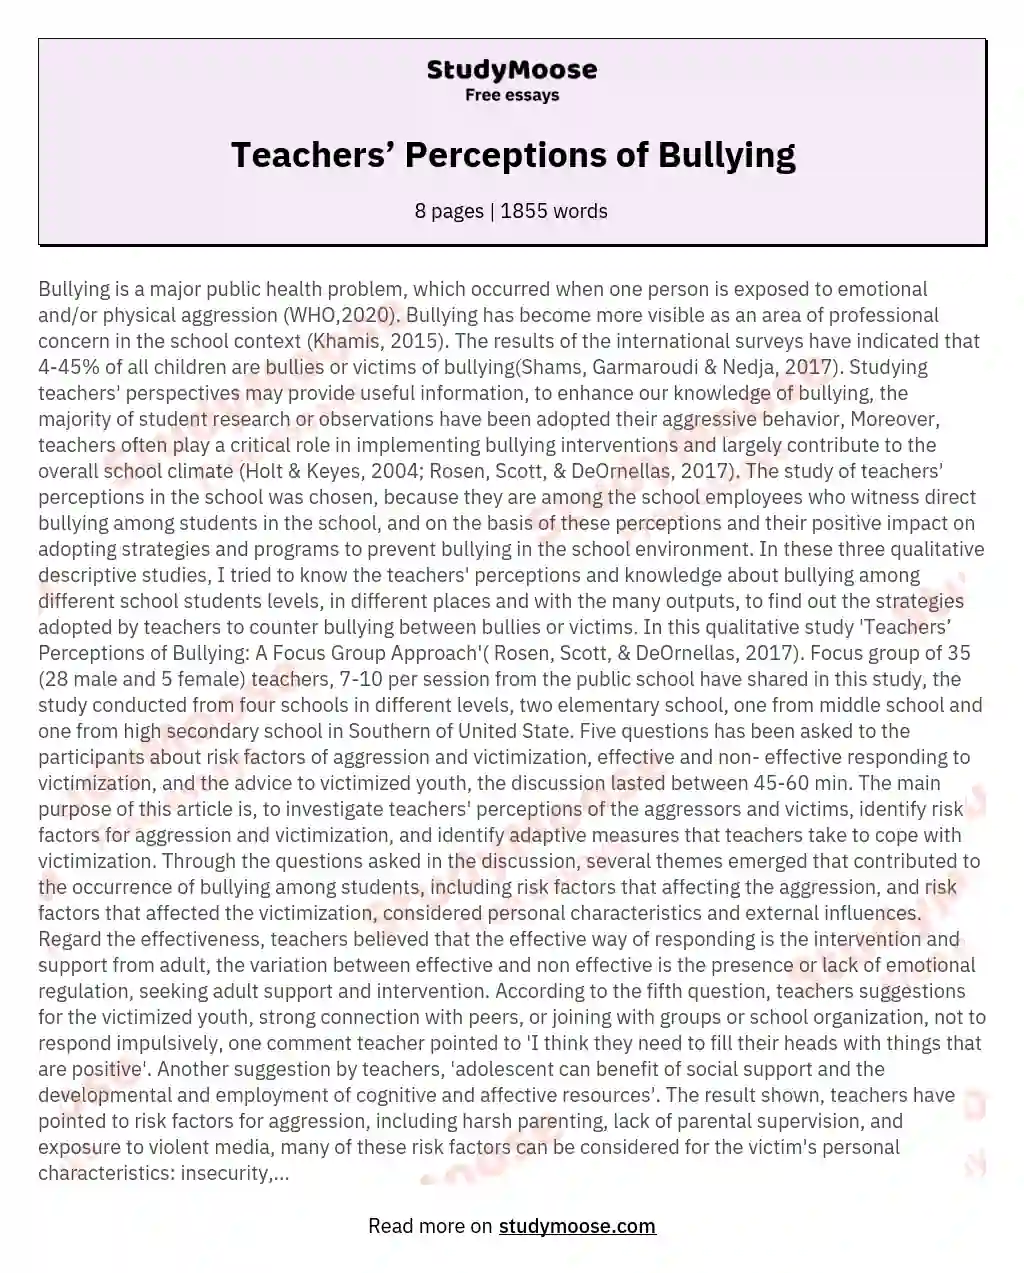 Teachers’ Perceptions of Bullying essay